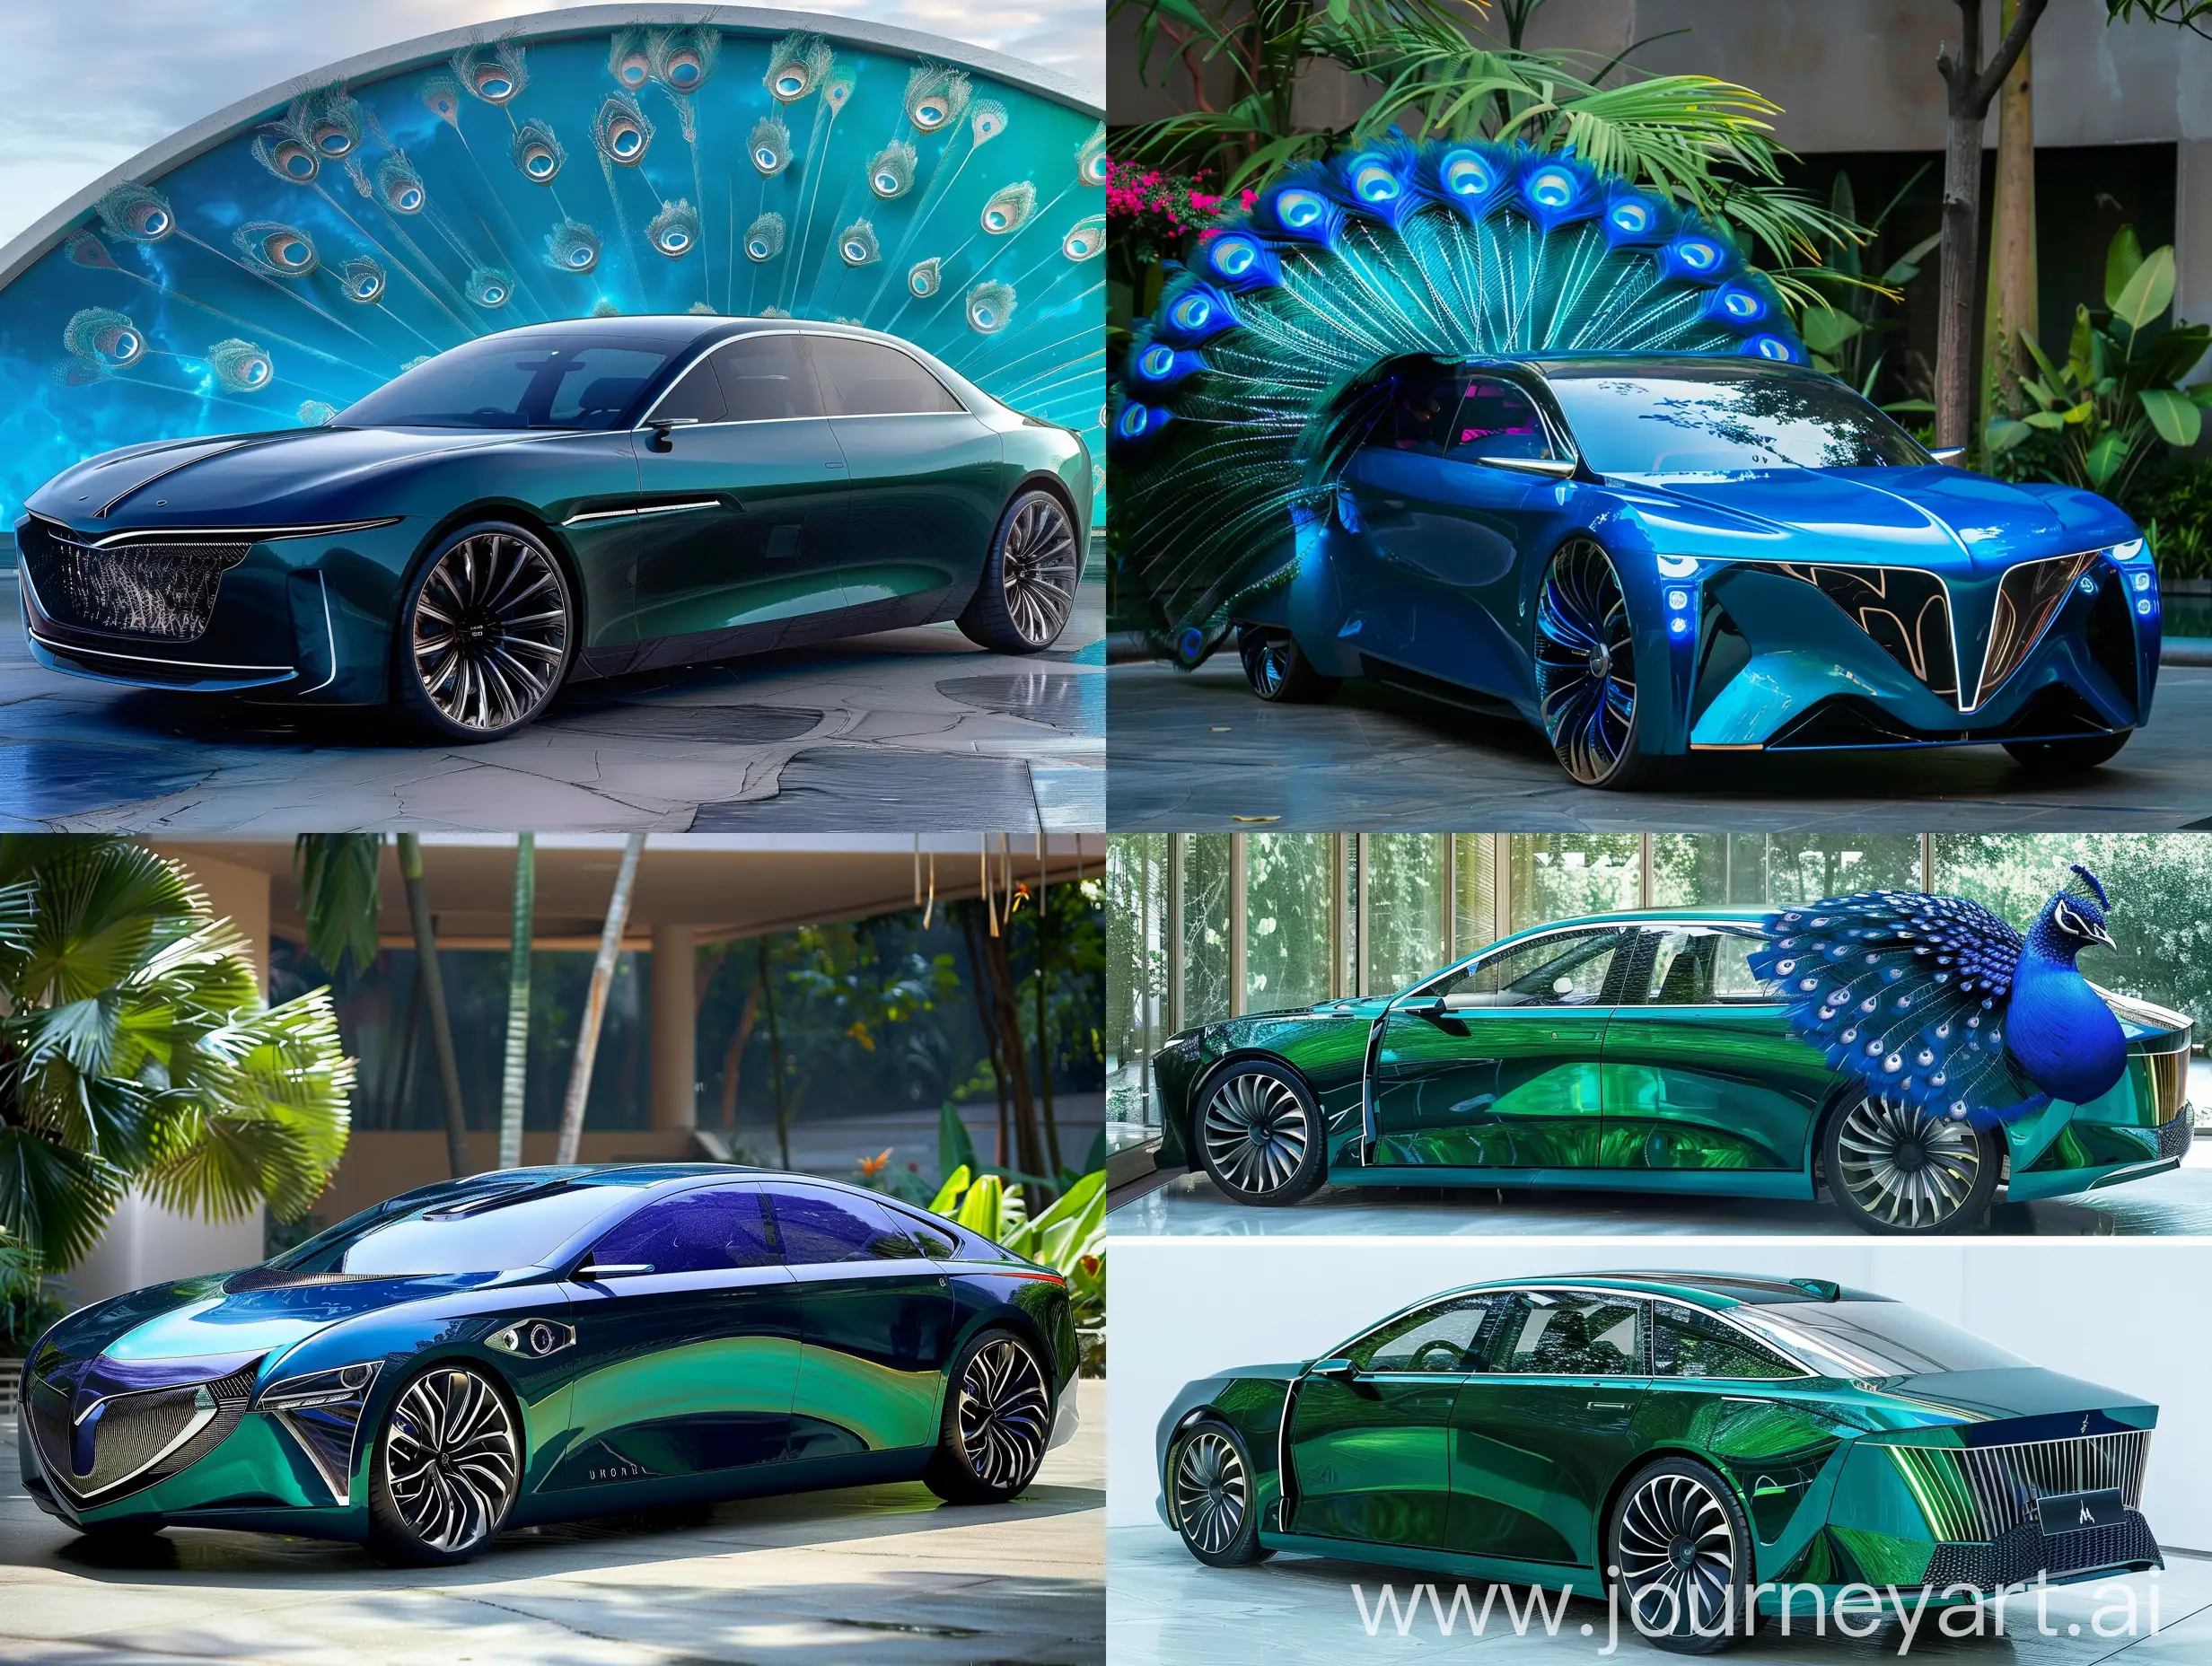 Hindustan motors ambassador sedan re-designed for year 2050. futuristic
inspired from peacock 